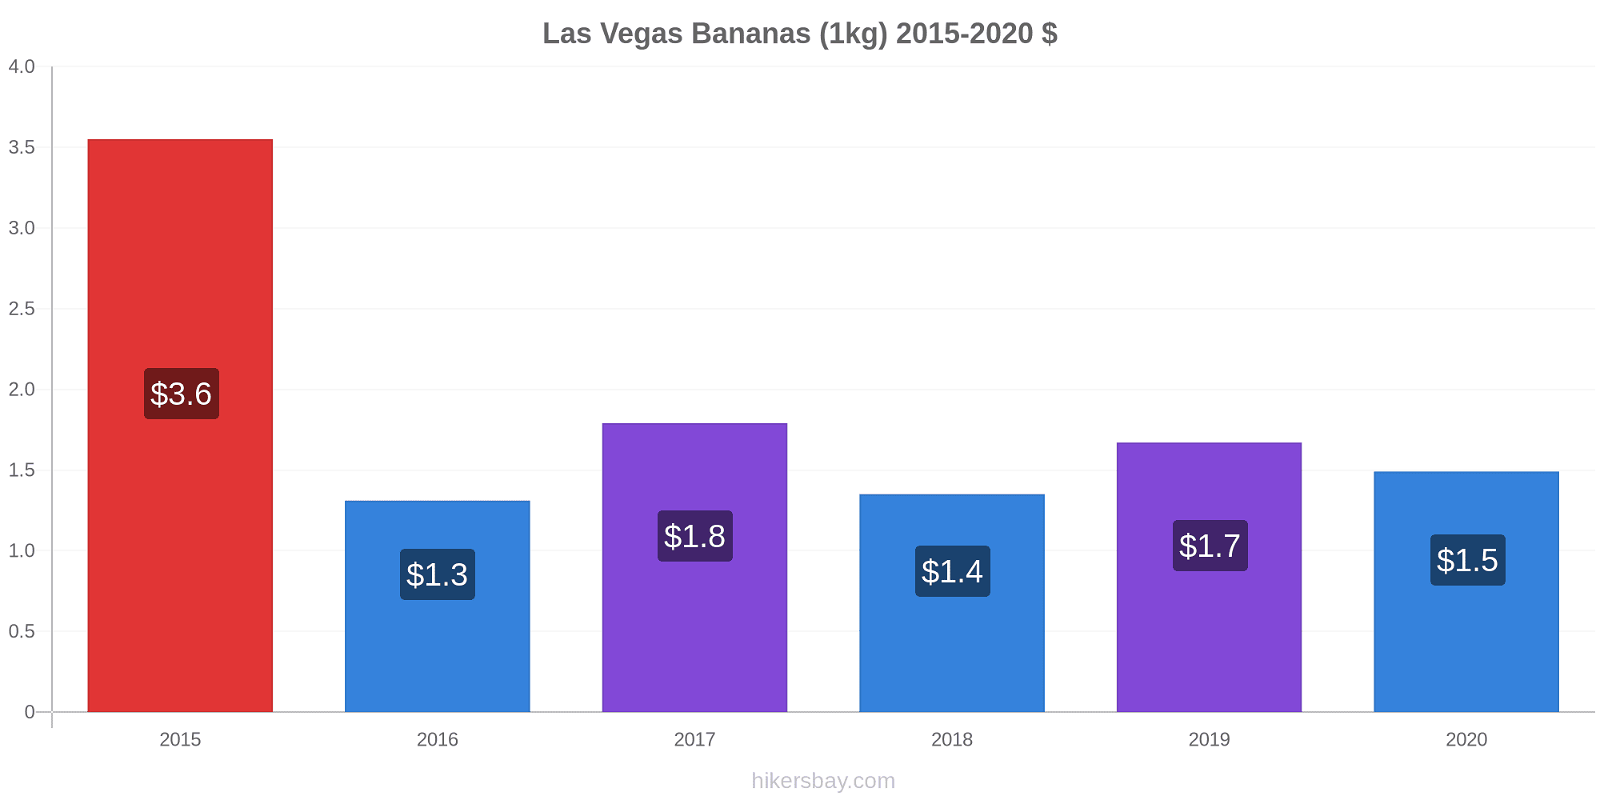 Las Vegas price changes Bananas (1kg) hikersbay.com